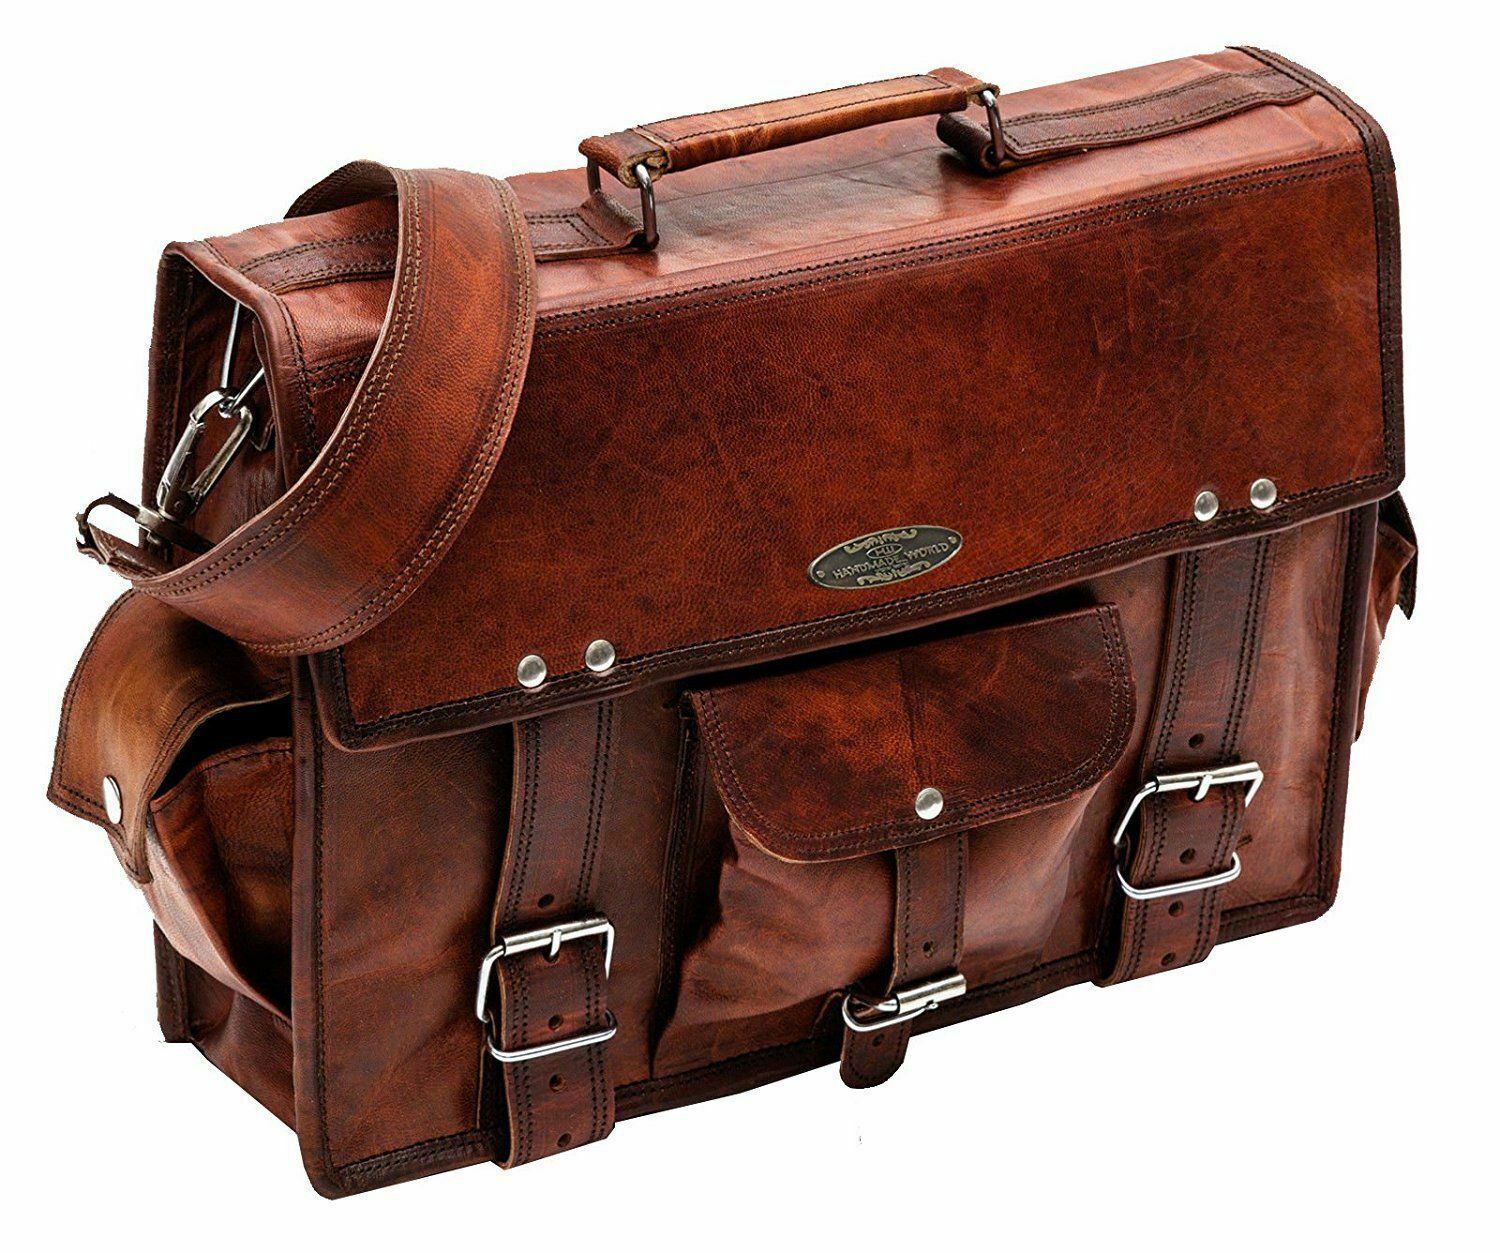 New Leather Laptop Bag Cross-Over The Shoulder Briefcase Satchel For Men & Women - Bags